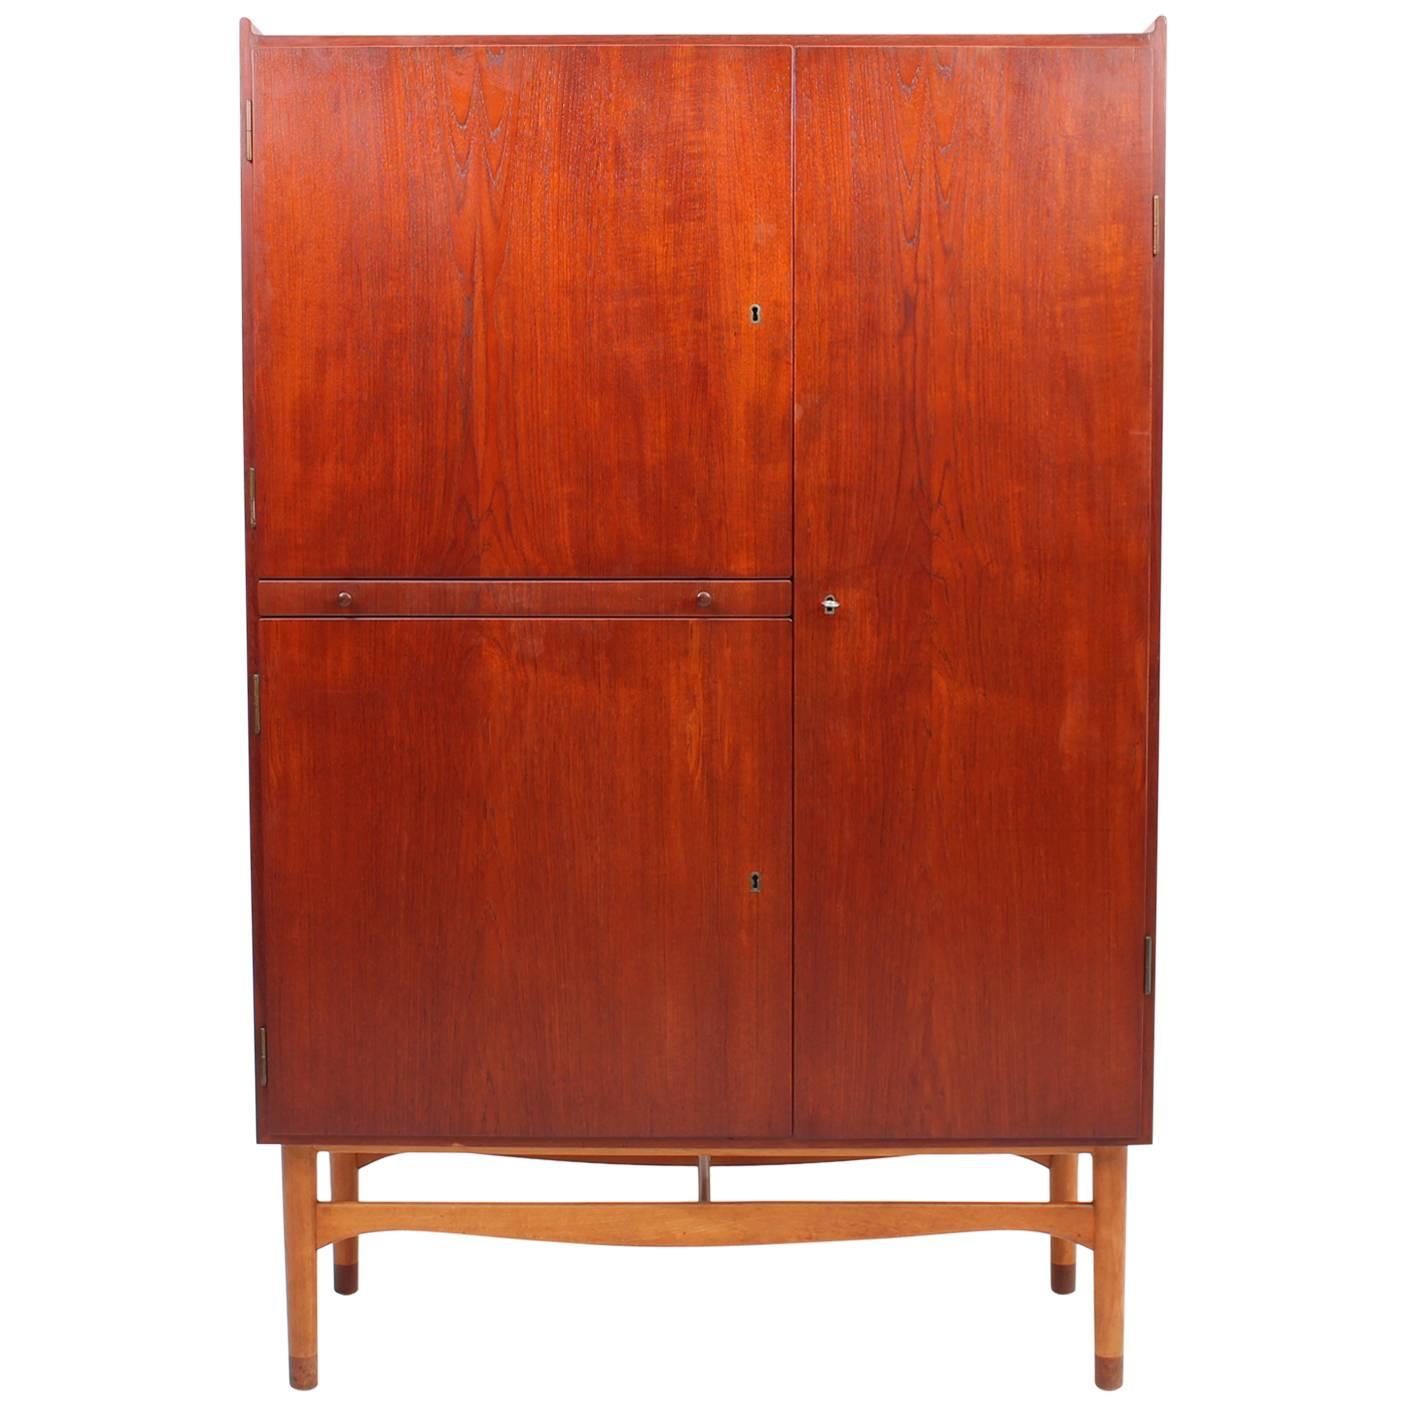 Rare Teak and Beech Cabinet/Wardrobe by Finn Juhl for Bovirke, 1950s For Sale